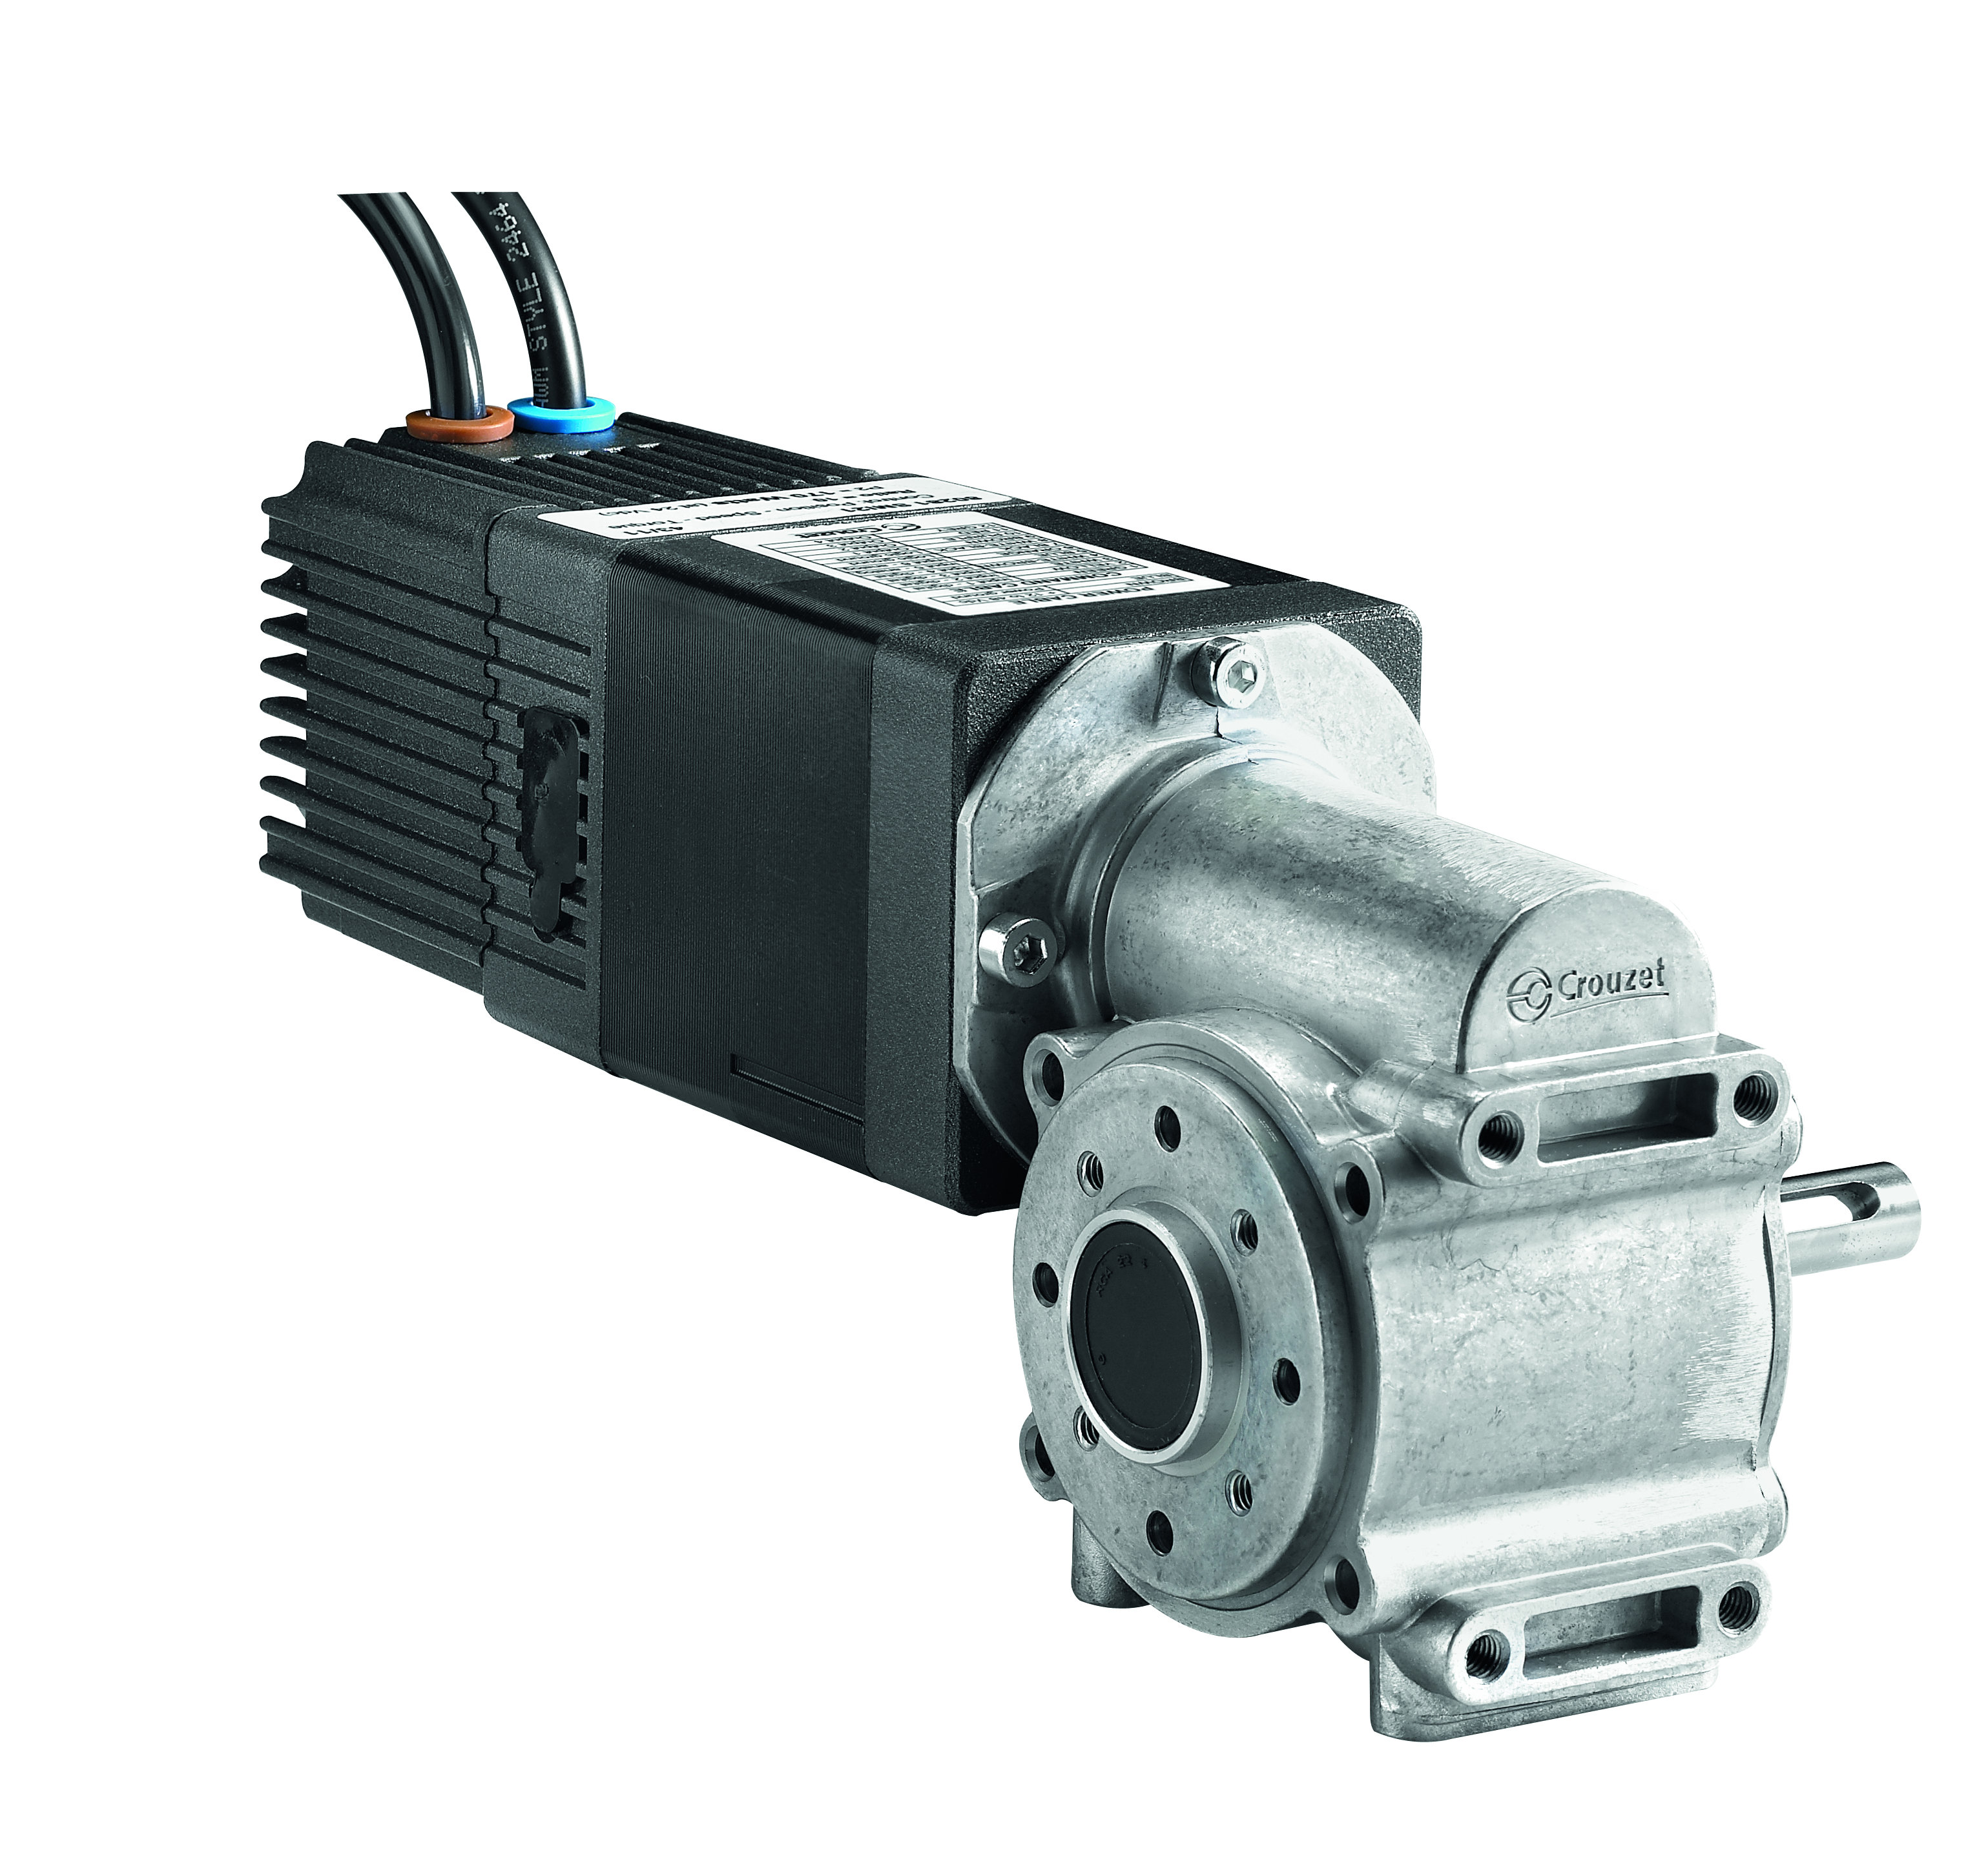 SQ57 Motor 150W 12-32Vdc + Drive TNi21 0-10V + Gearbox RAD10 ratio 10-1